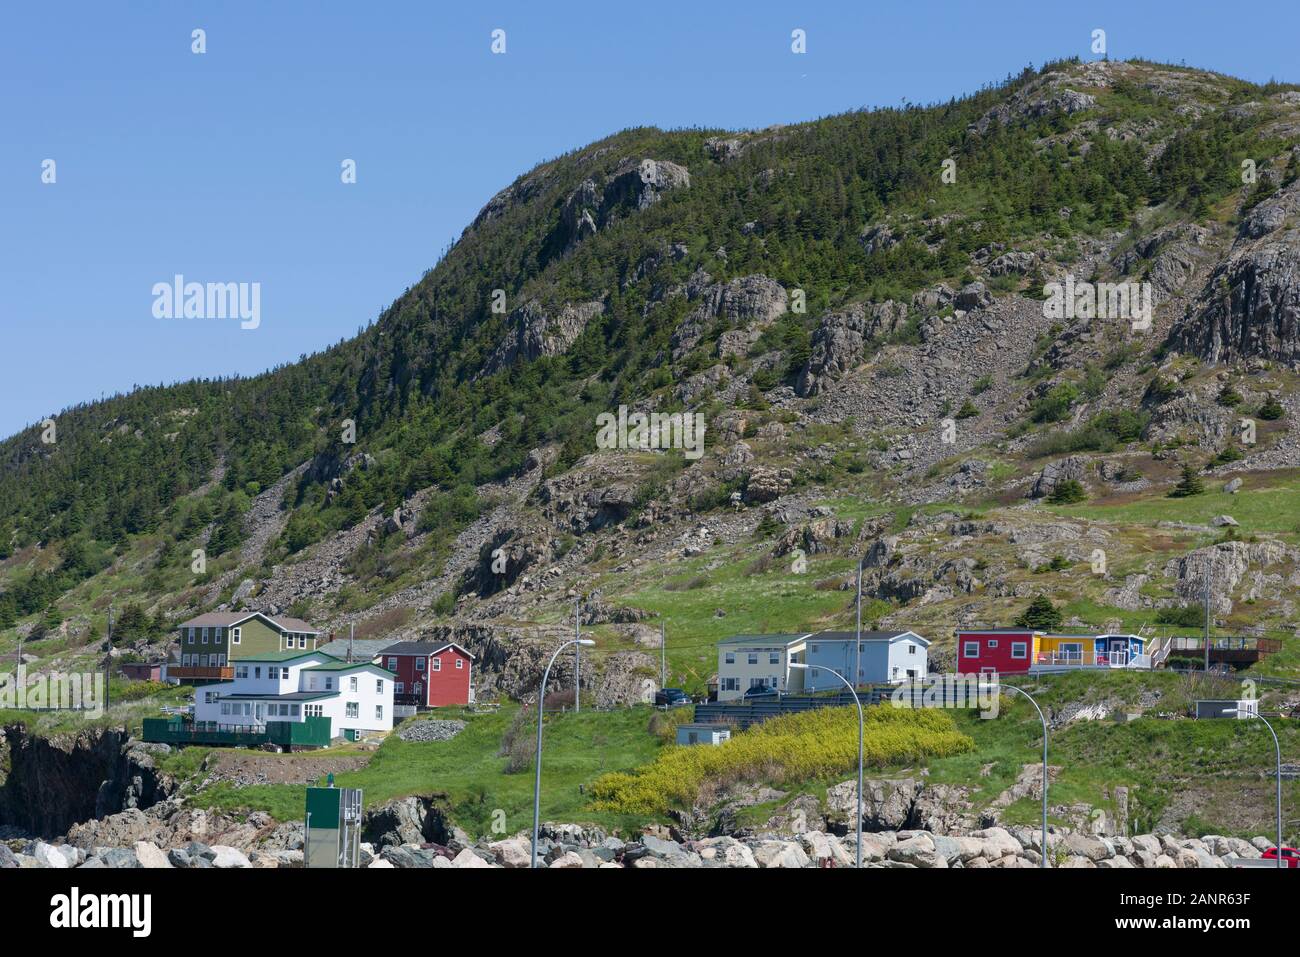 Portugal cove, Newfoundland, Canada. A rural seashore community located on the eastern Avalon Peninsula of Newfoundland. Stock Photo